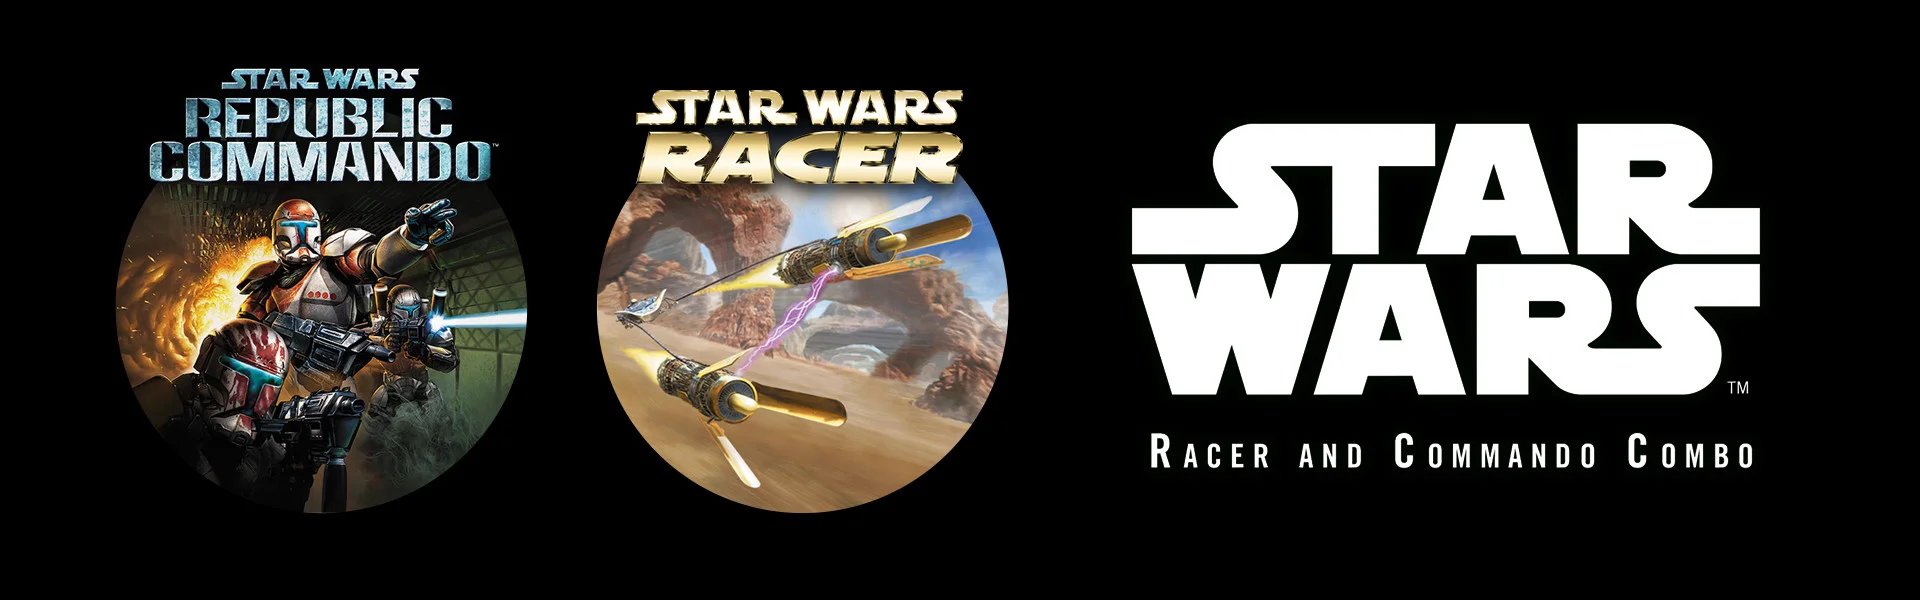 Коллекции Star Wars Jedi Knight и Star Wars Racer and Commando выпустят на PS4 и Switch - фото 2